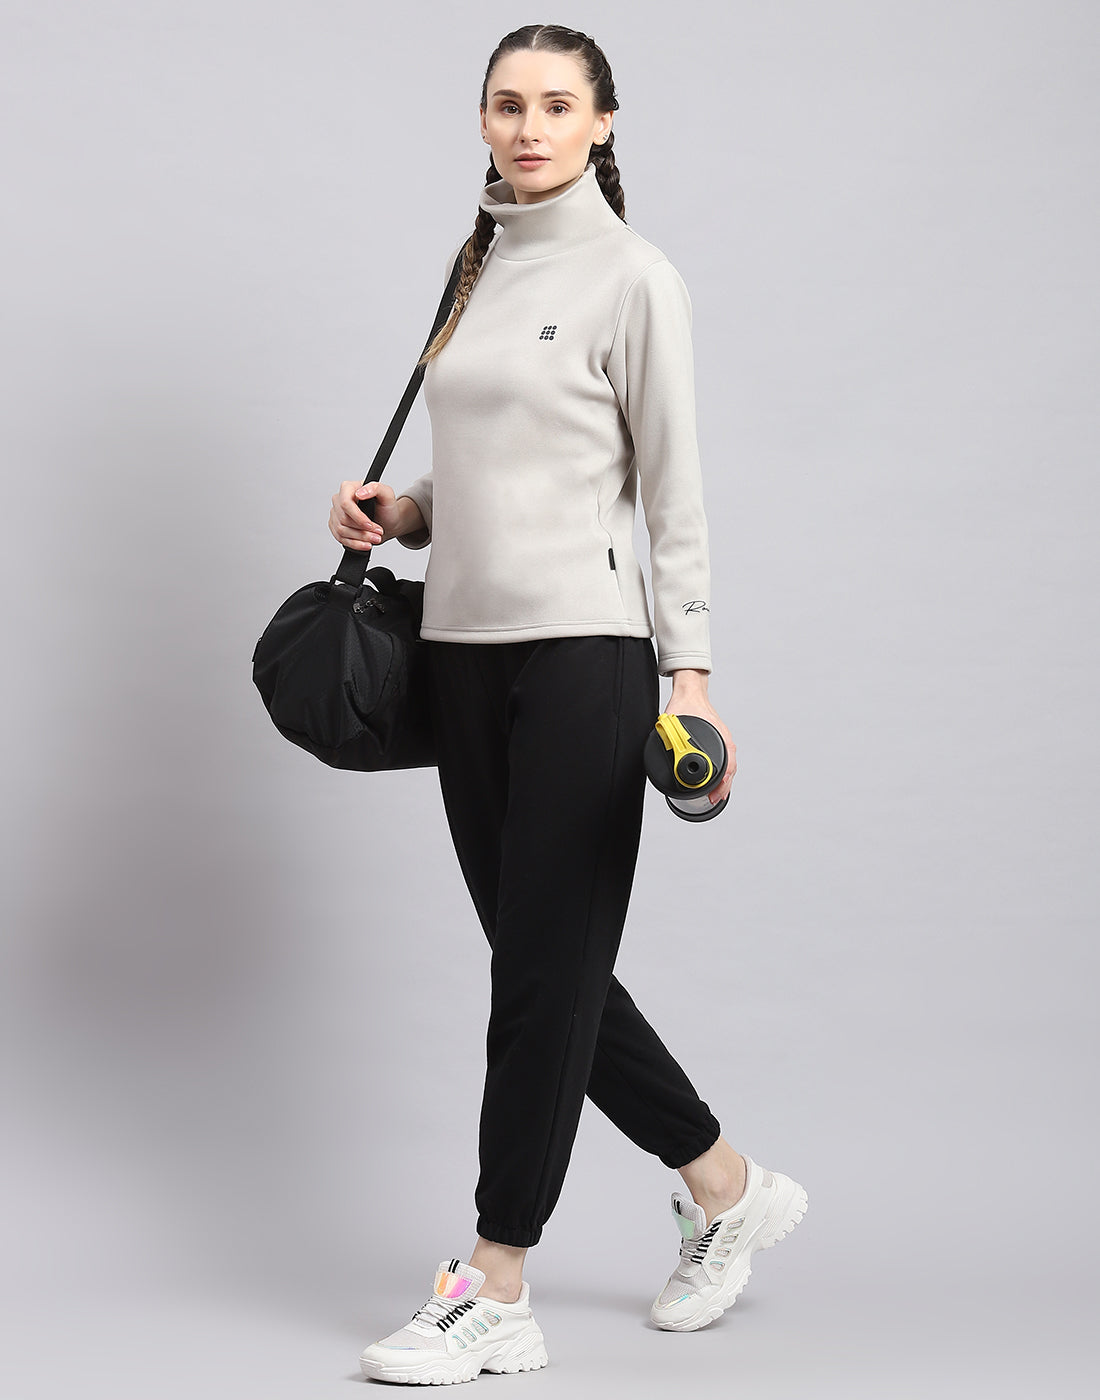 Women Nike Sweatshirts - Buy Women Nike Sweatshirts online in India